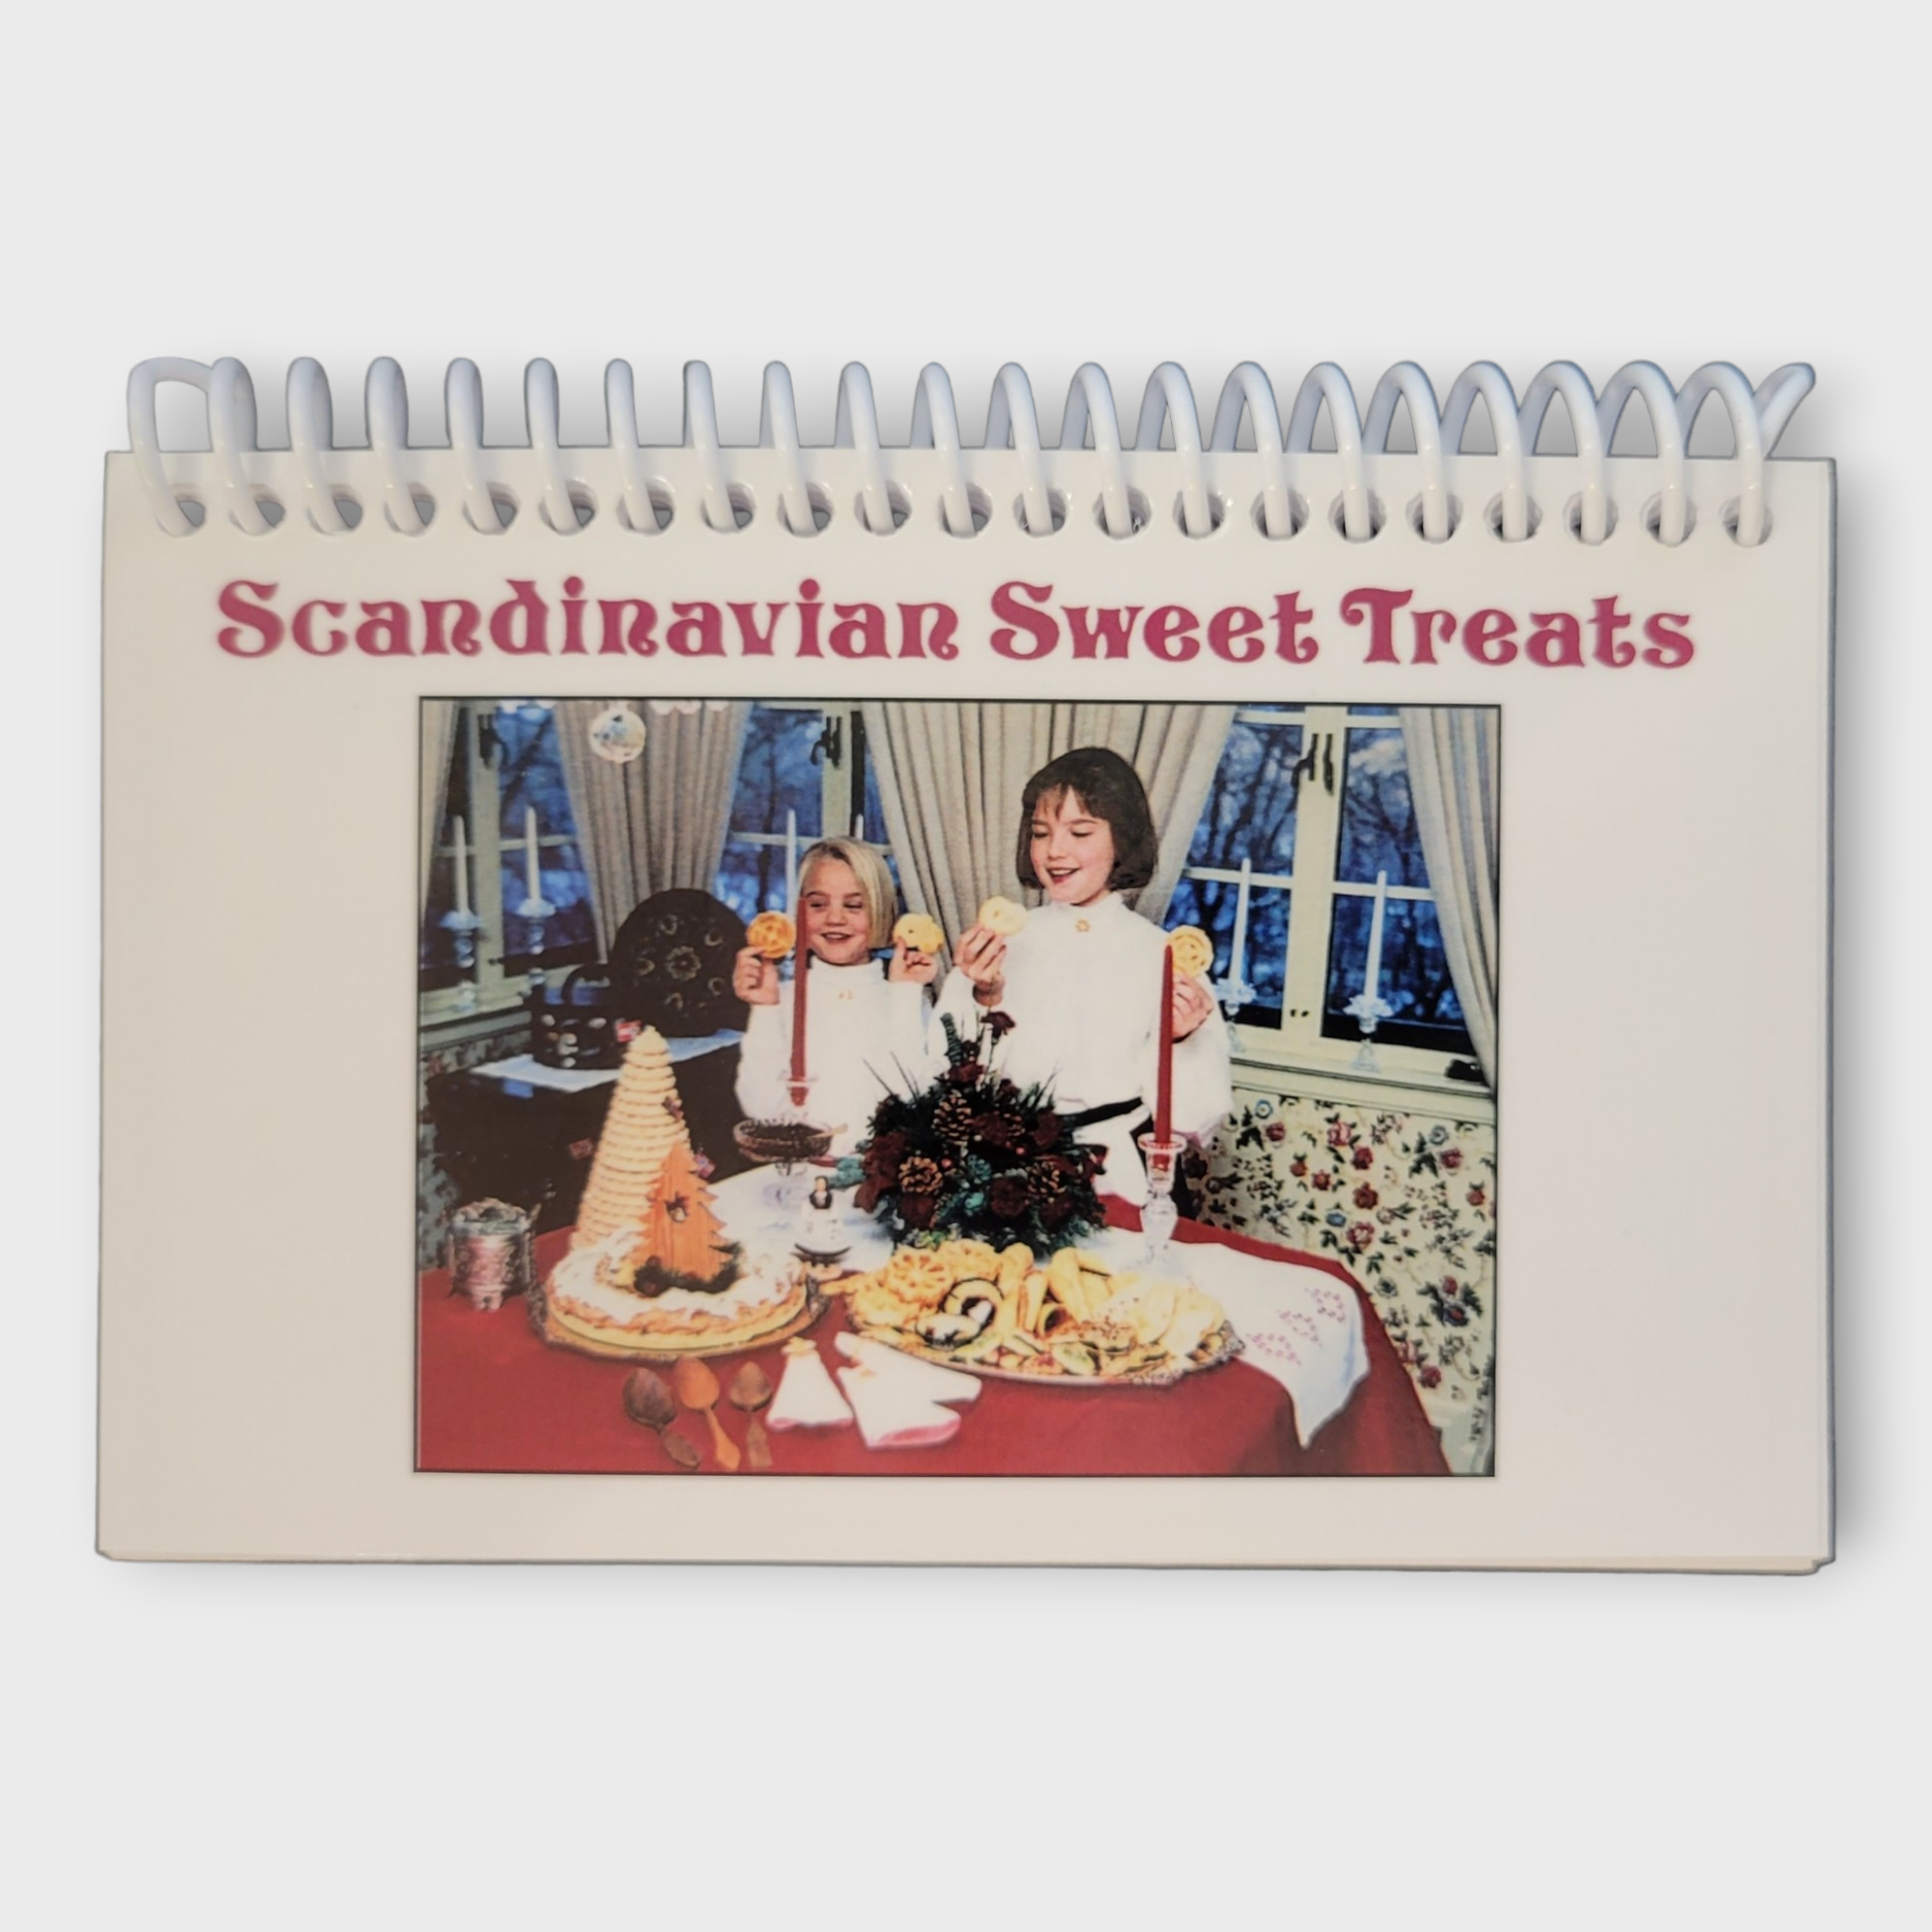 Book: Scandinavian Sweet Treats